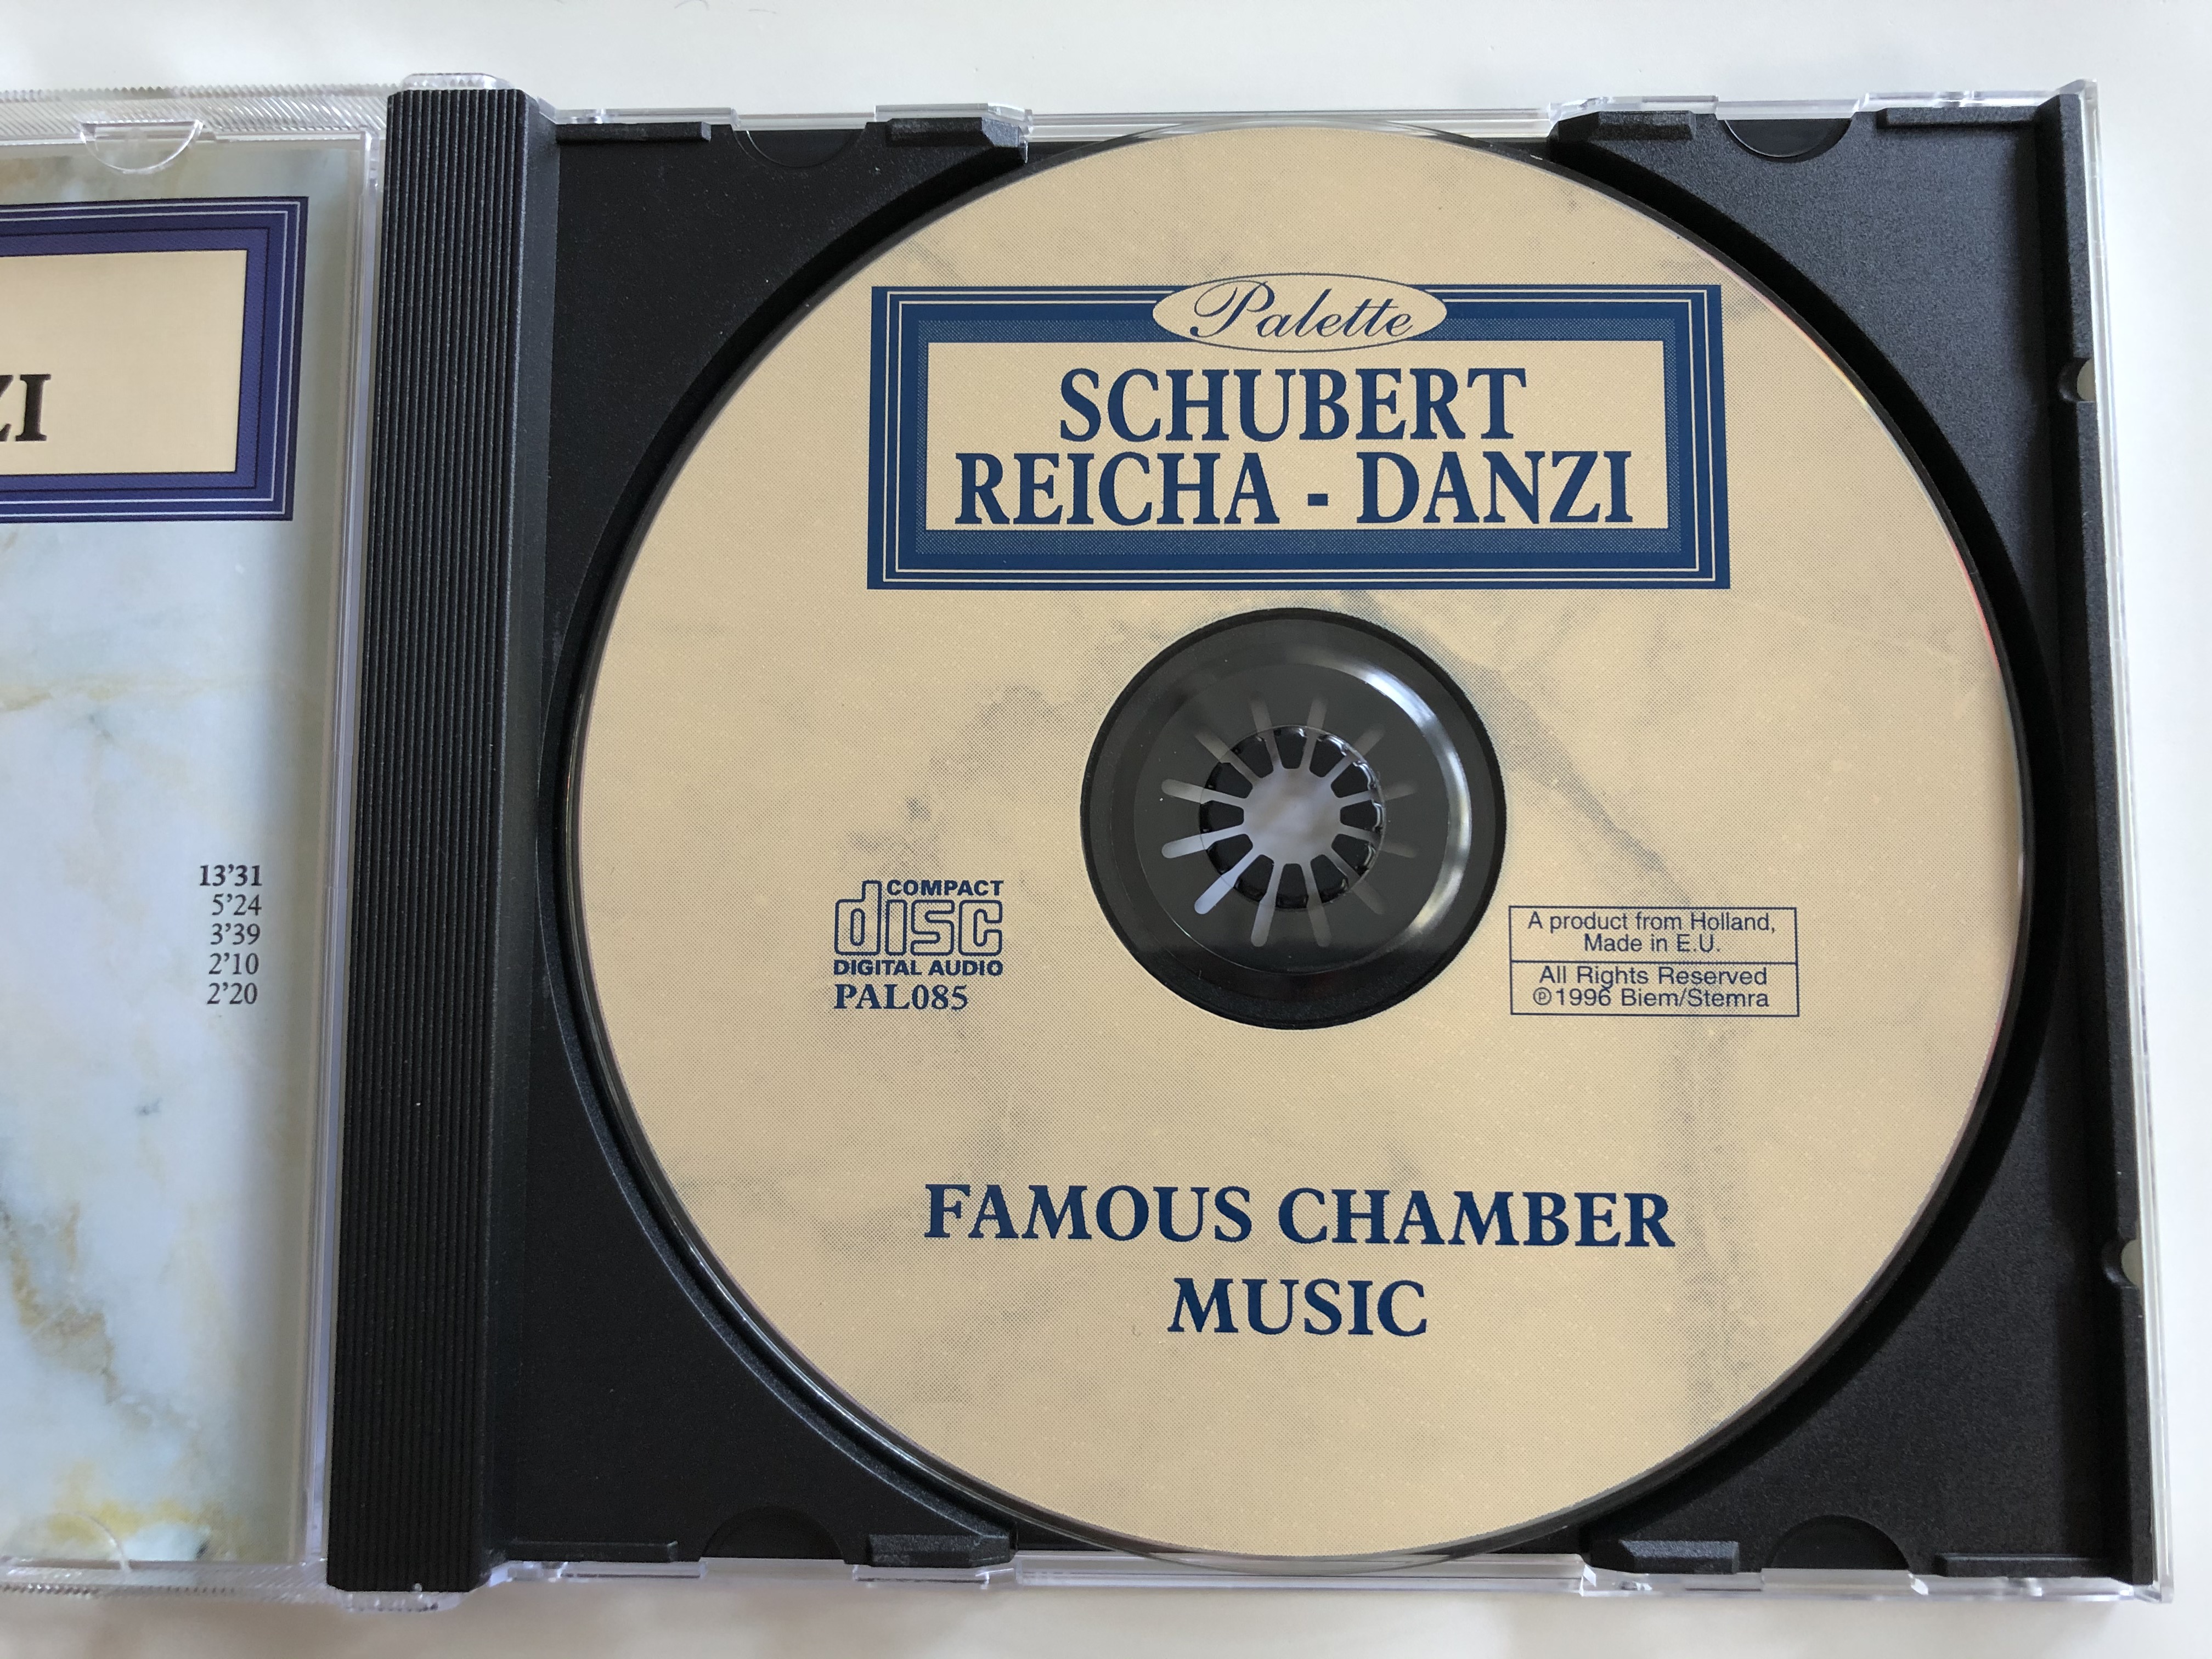 schubert-reicha-danzi-famous-chamber-music-palette-audio-cd-1996-pal085-3-.jpg